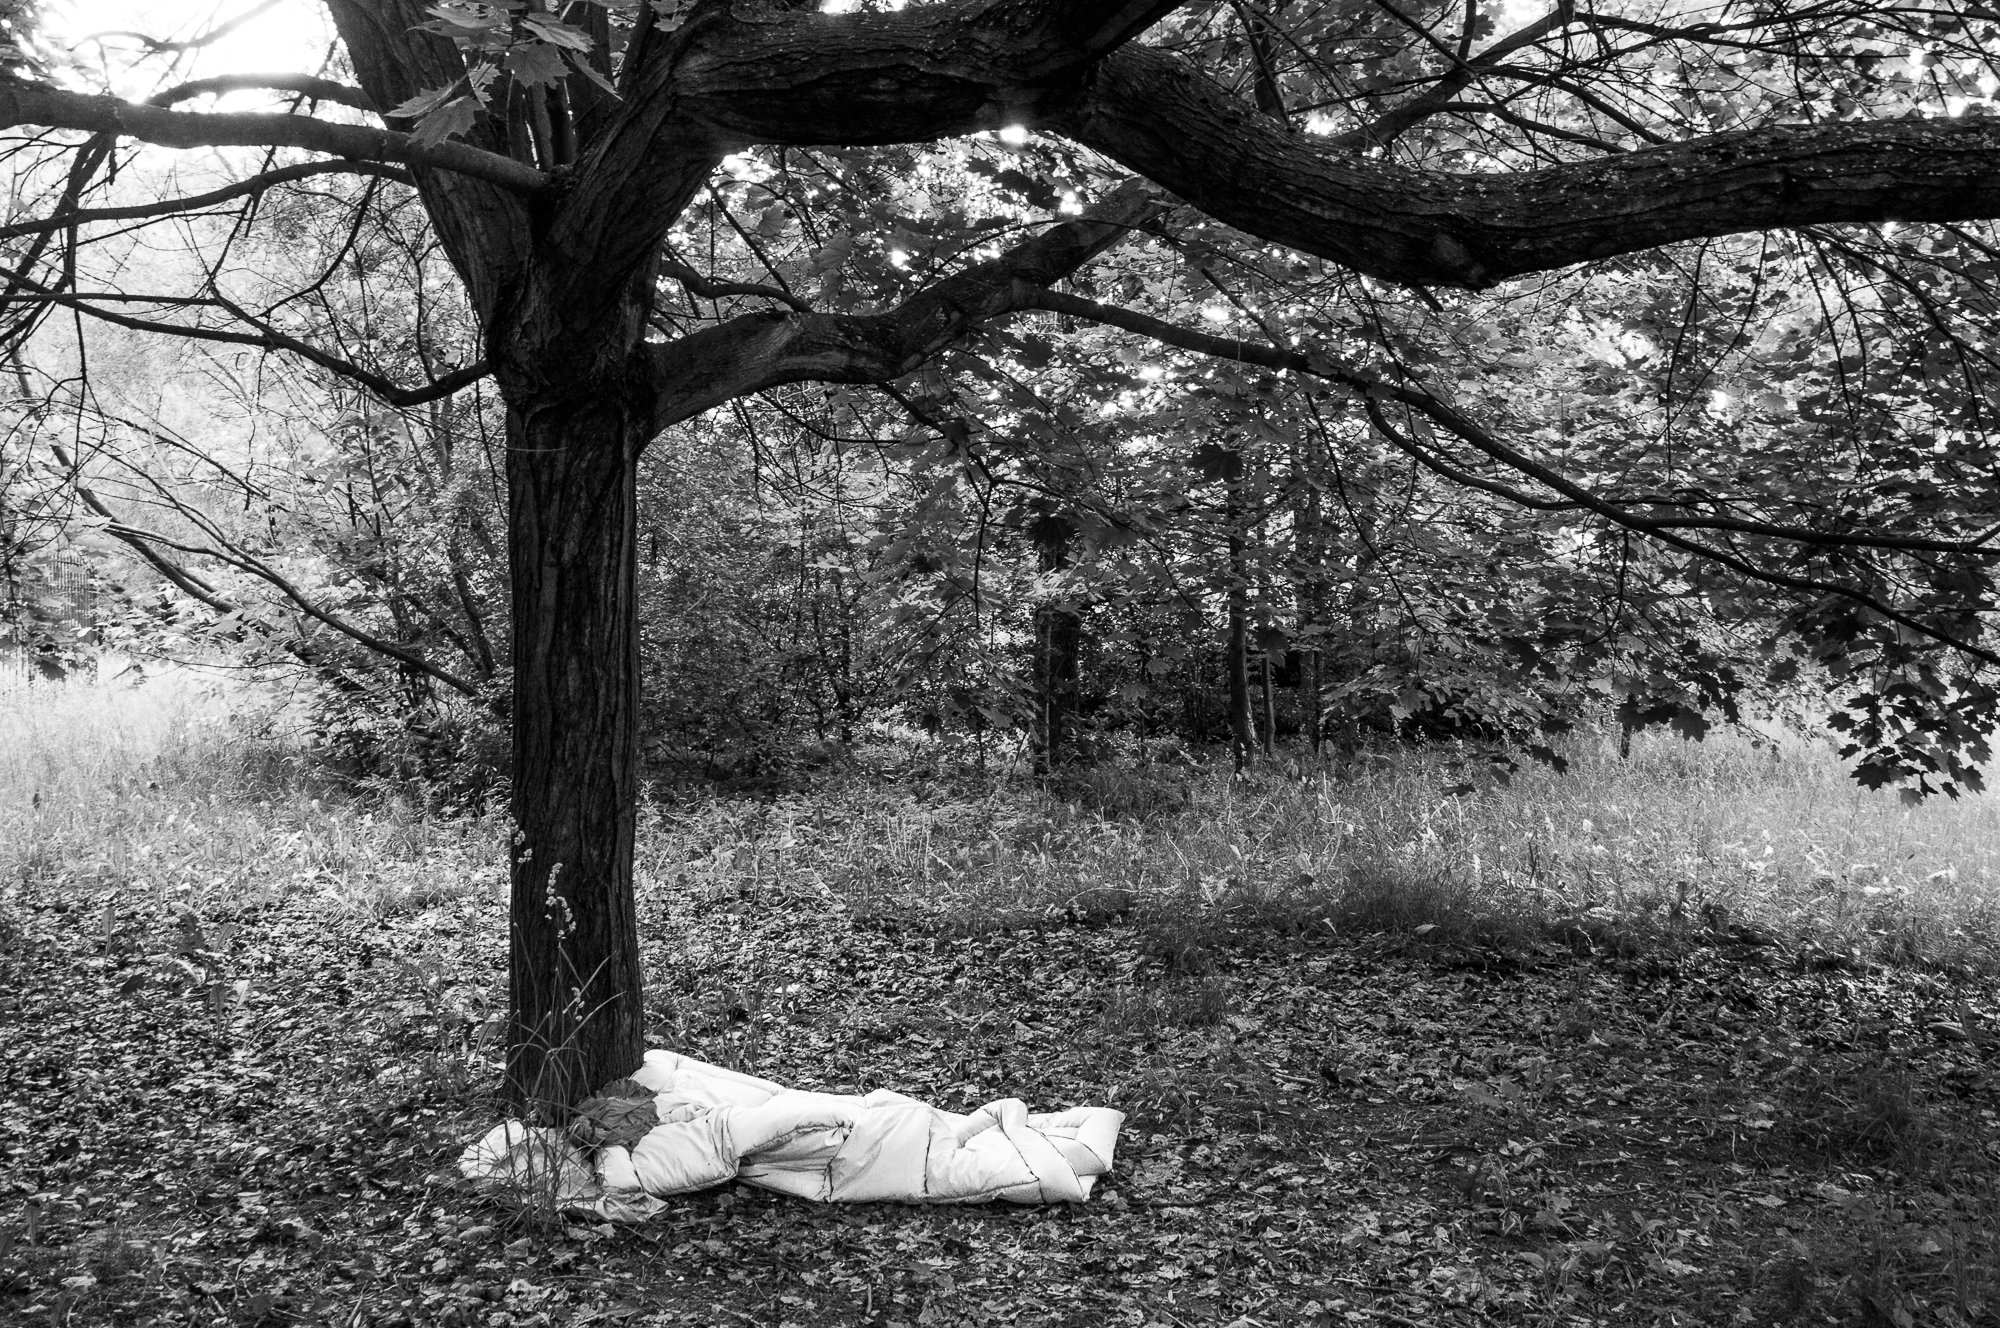 Adam Mazek Photography. Warsaw (Warszawa) 2017. Post: "Horror scene." Death body and the tree.